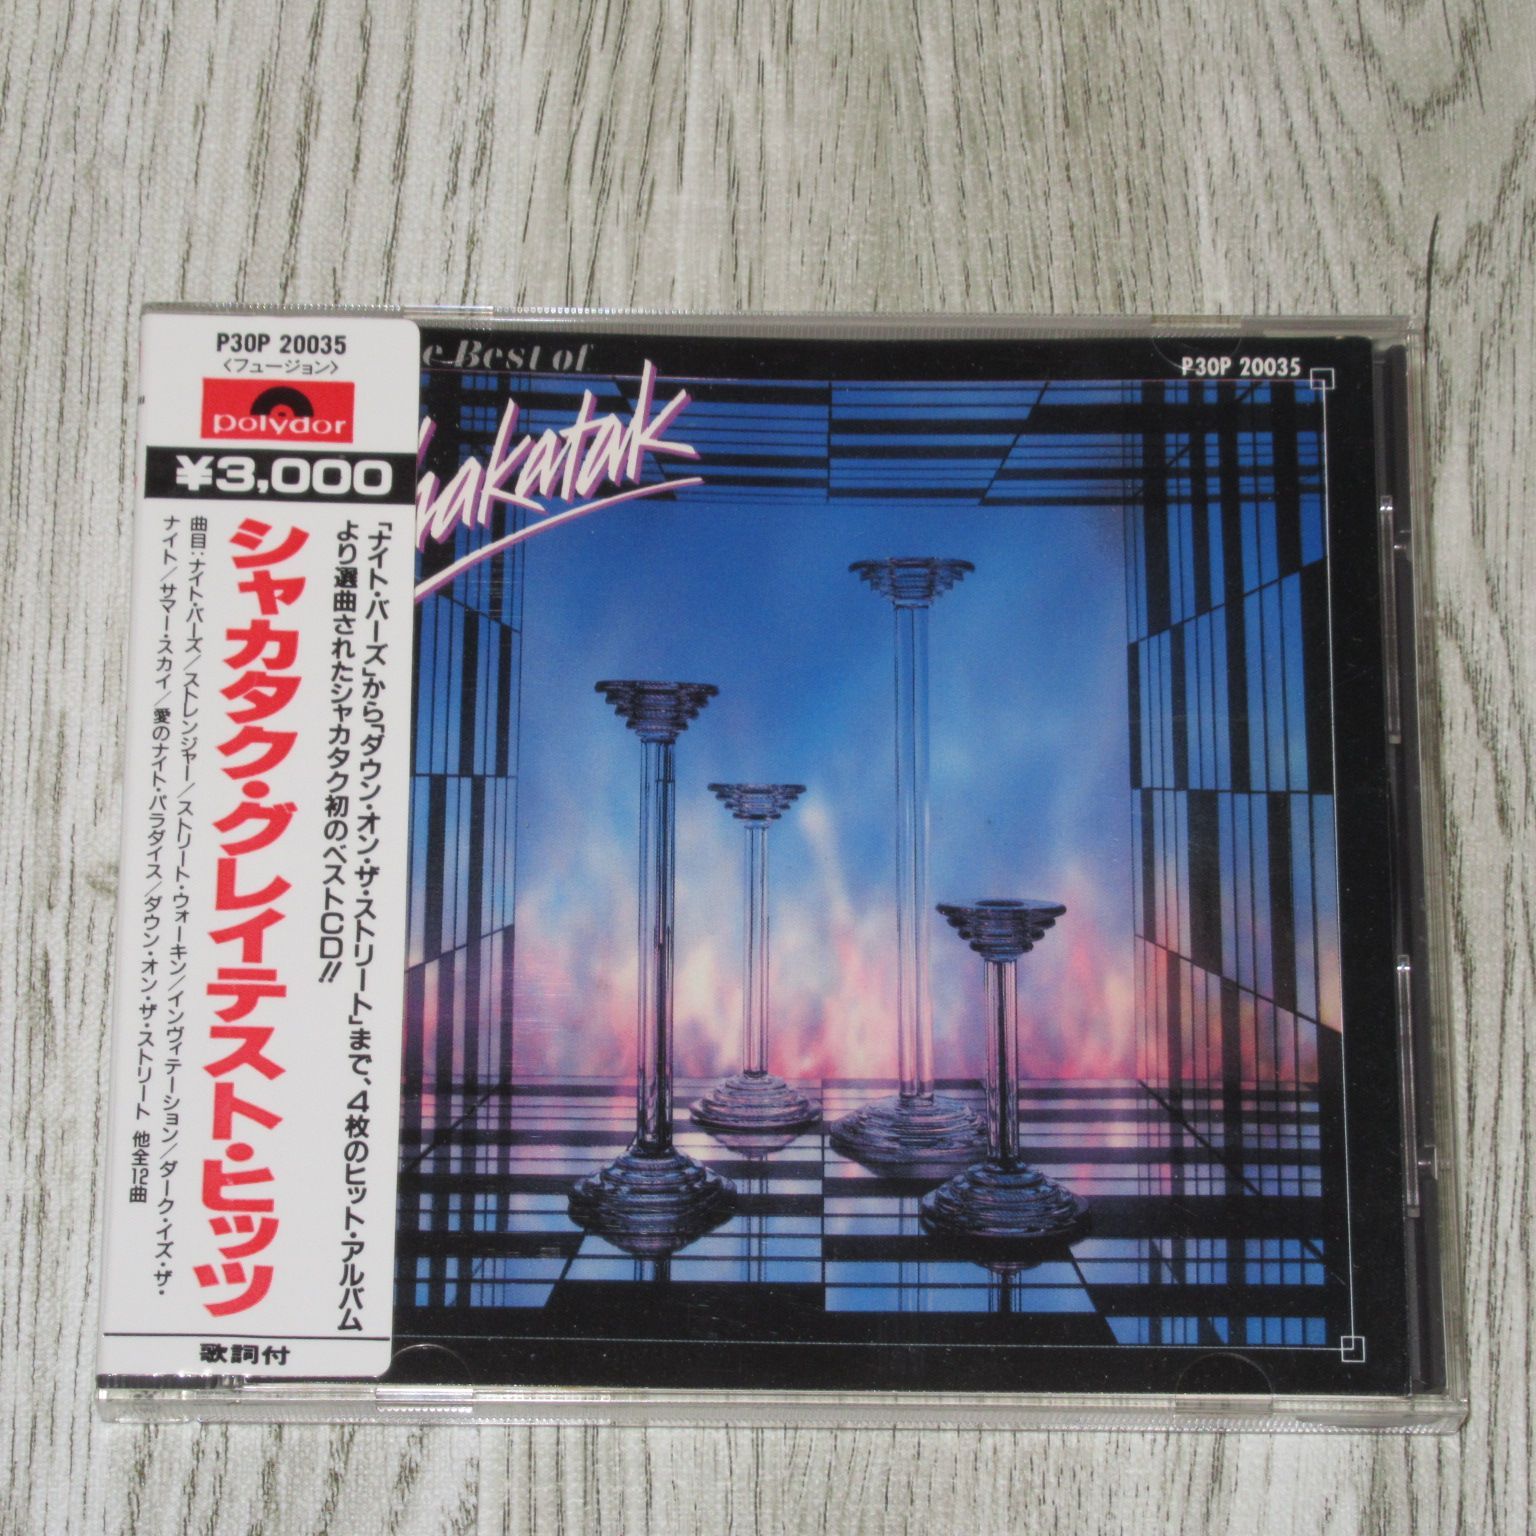 CD シール帯付(状態：綺麗な方） シャカタク・グレイテスト・ヒッツ P30P 20035 3000円 SHAKATAK GREATEST HITS  フュージョン - メルカリ